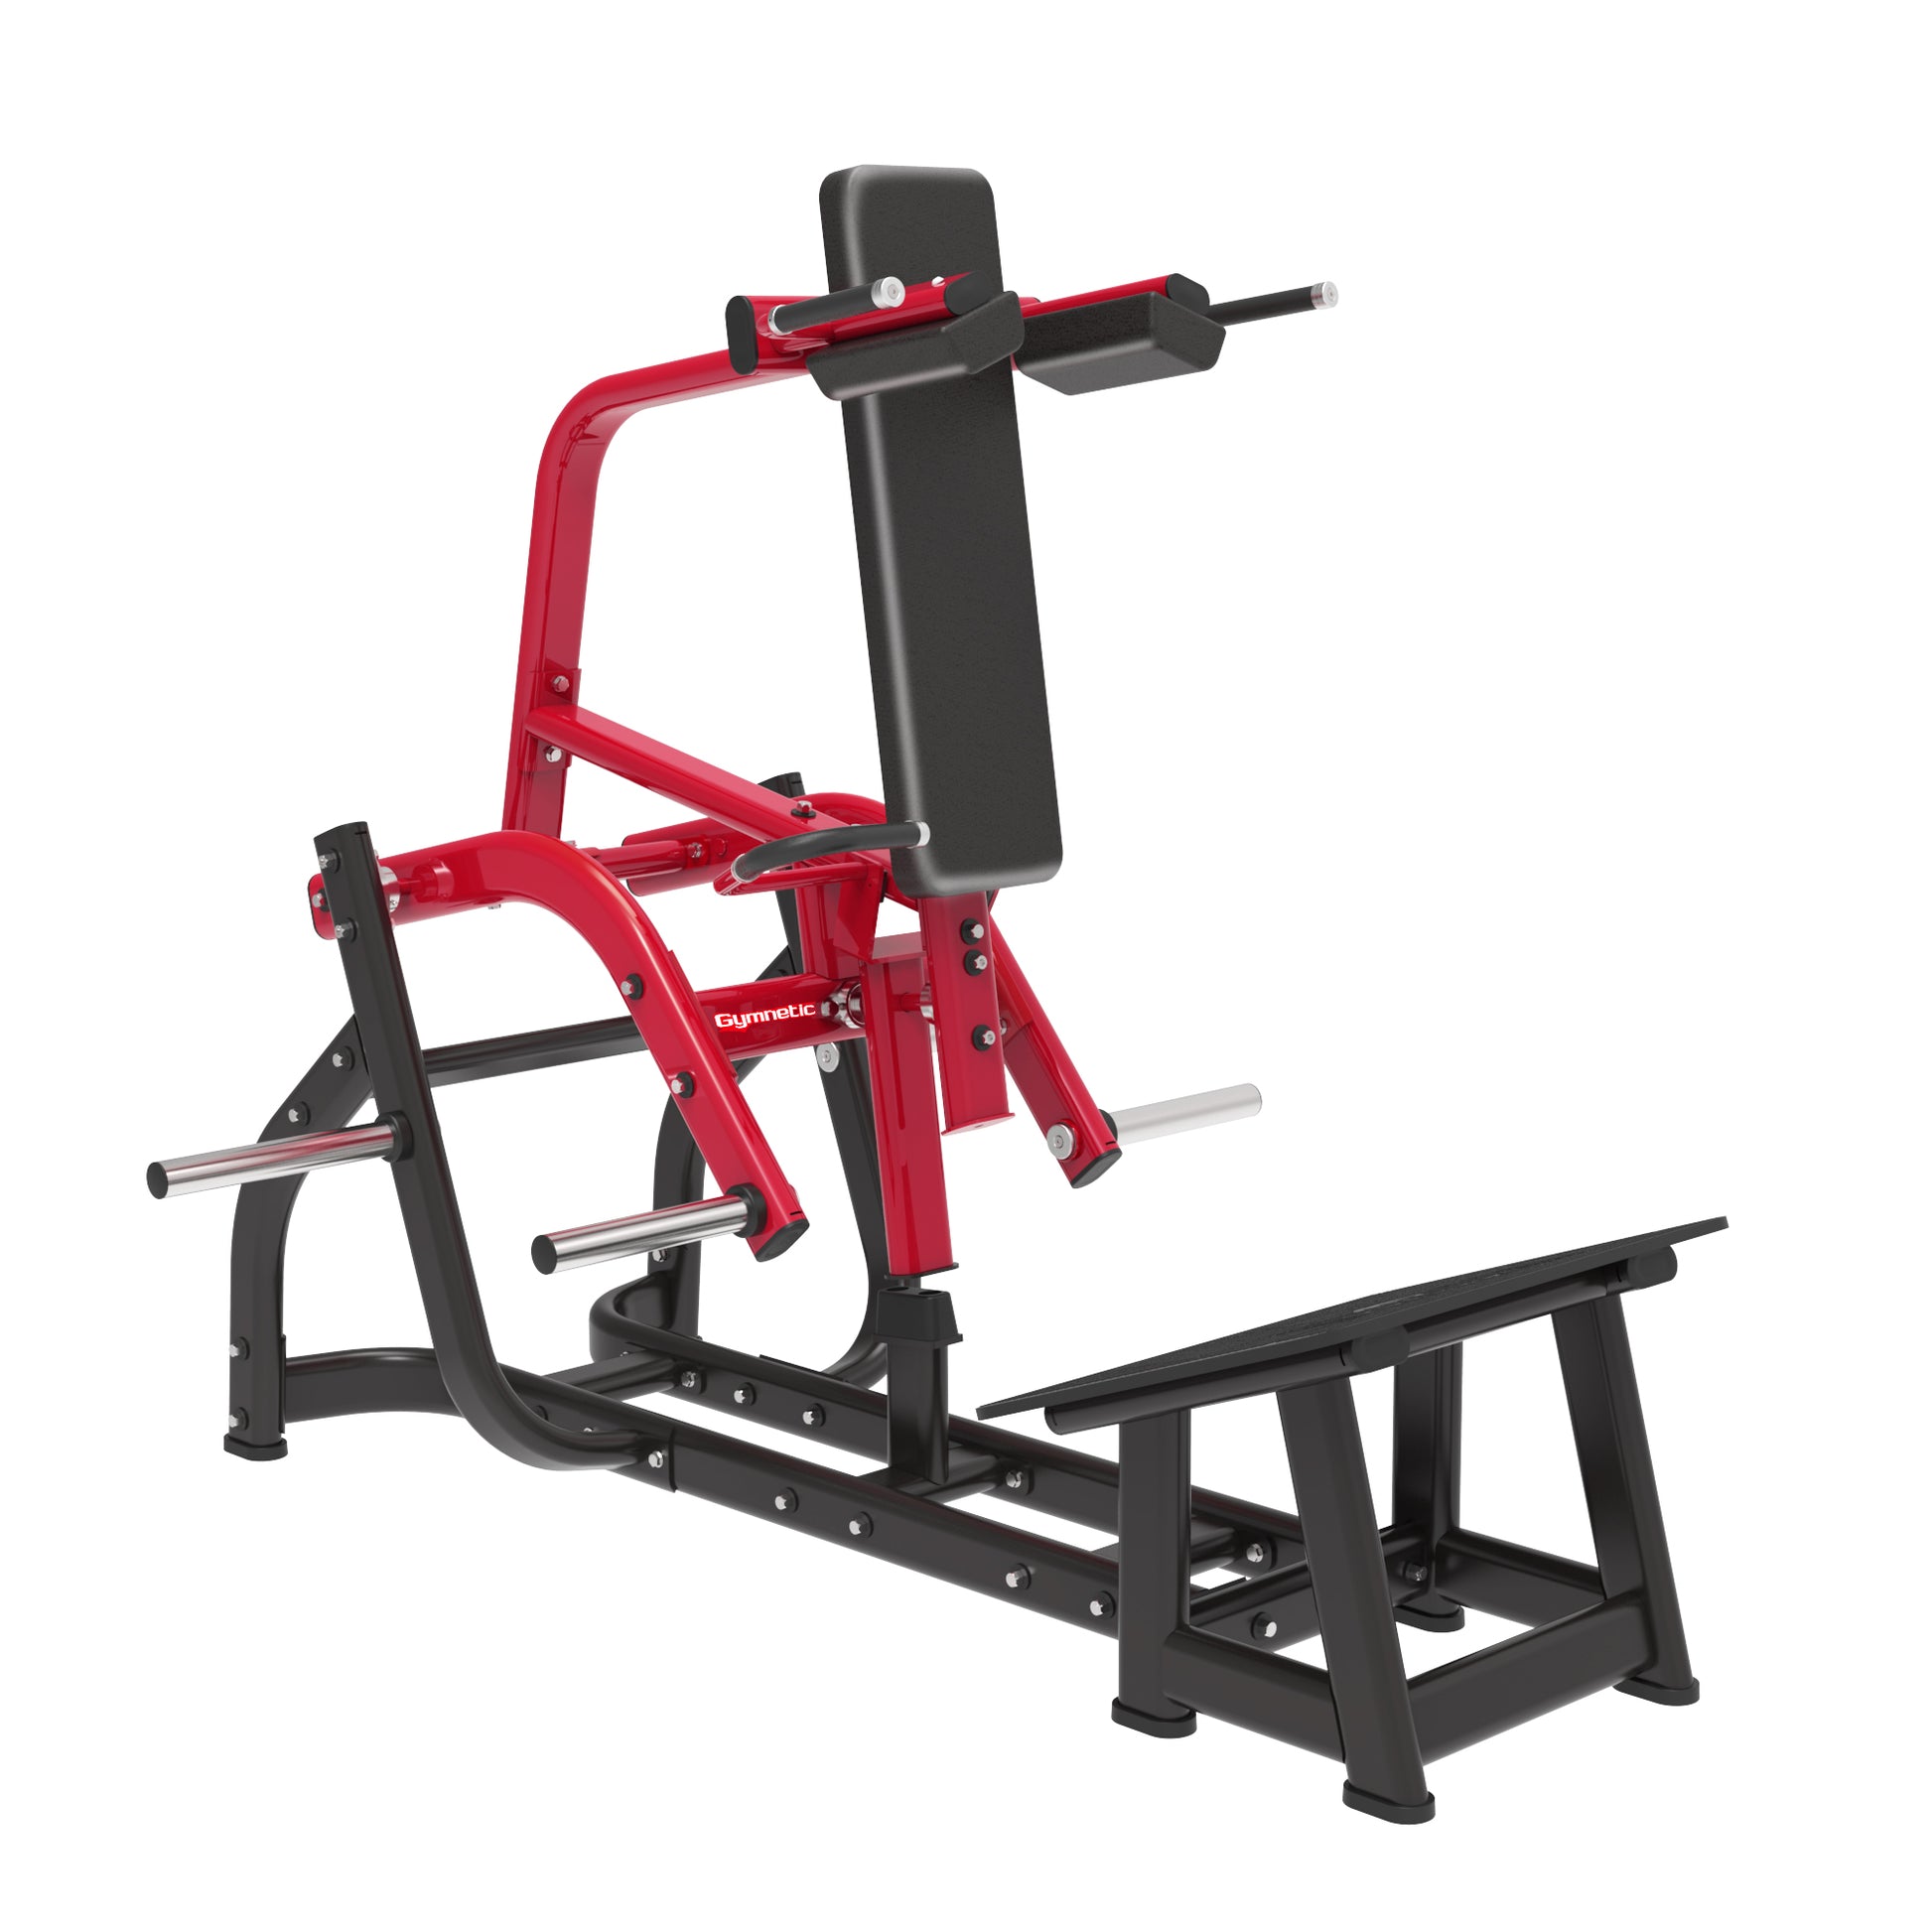 Power squat BGTN71 Gymnetic – Body Gym équipements